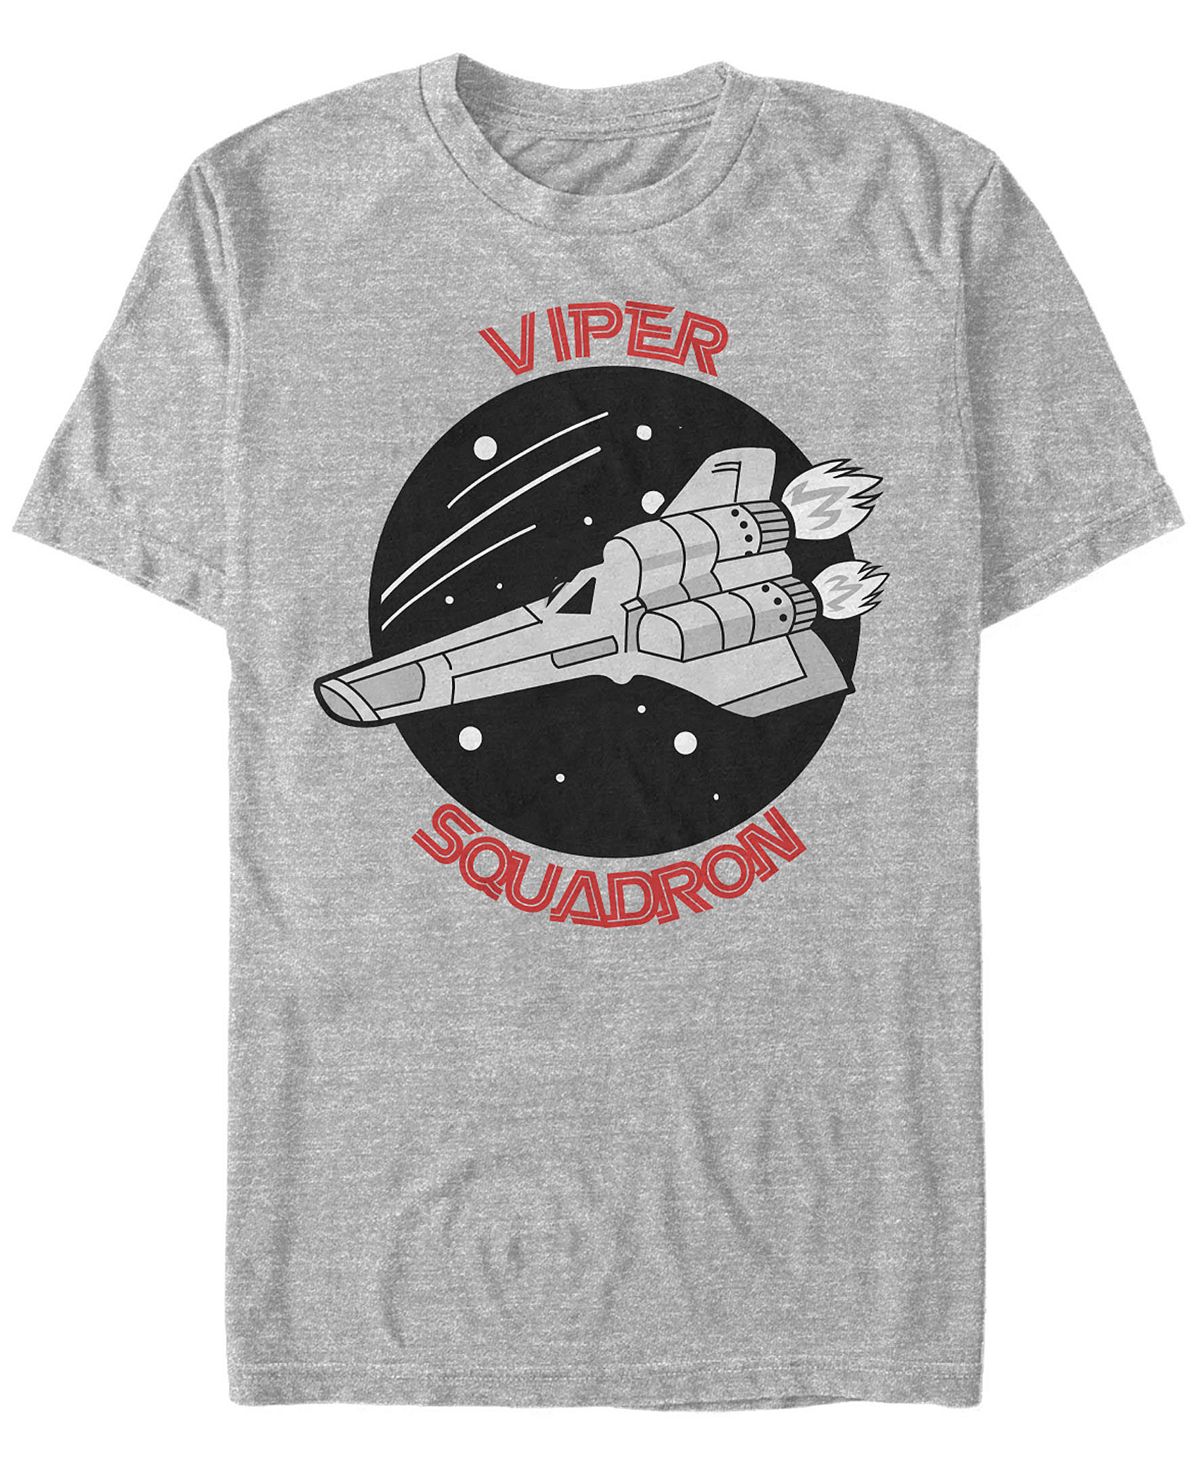 Мужская футболка с коротким рукавом viper squadron battlestar galactica Fifth Sun, мульти